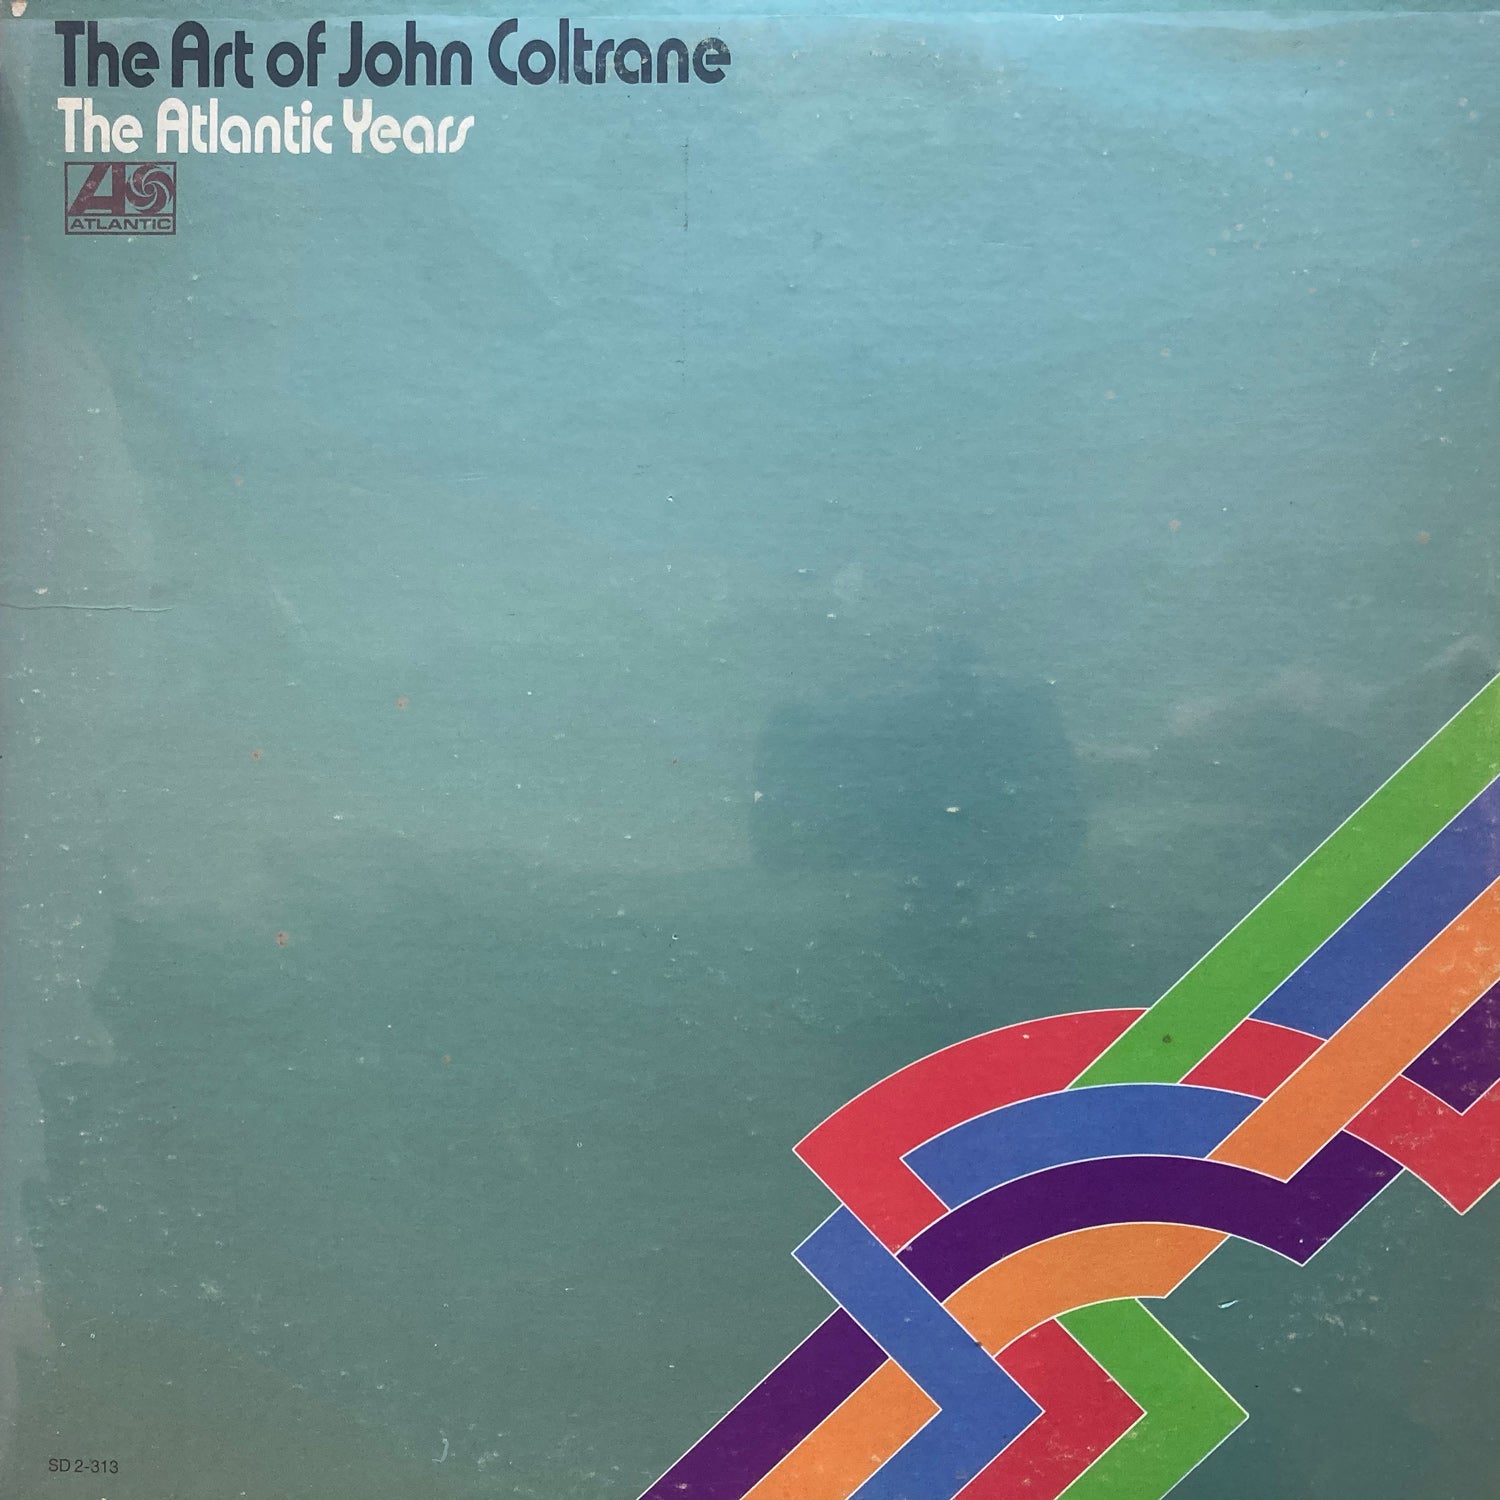 John Coltrane - The Art of (The Atlantic Years)